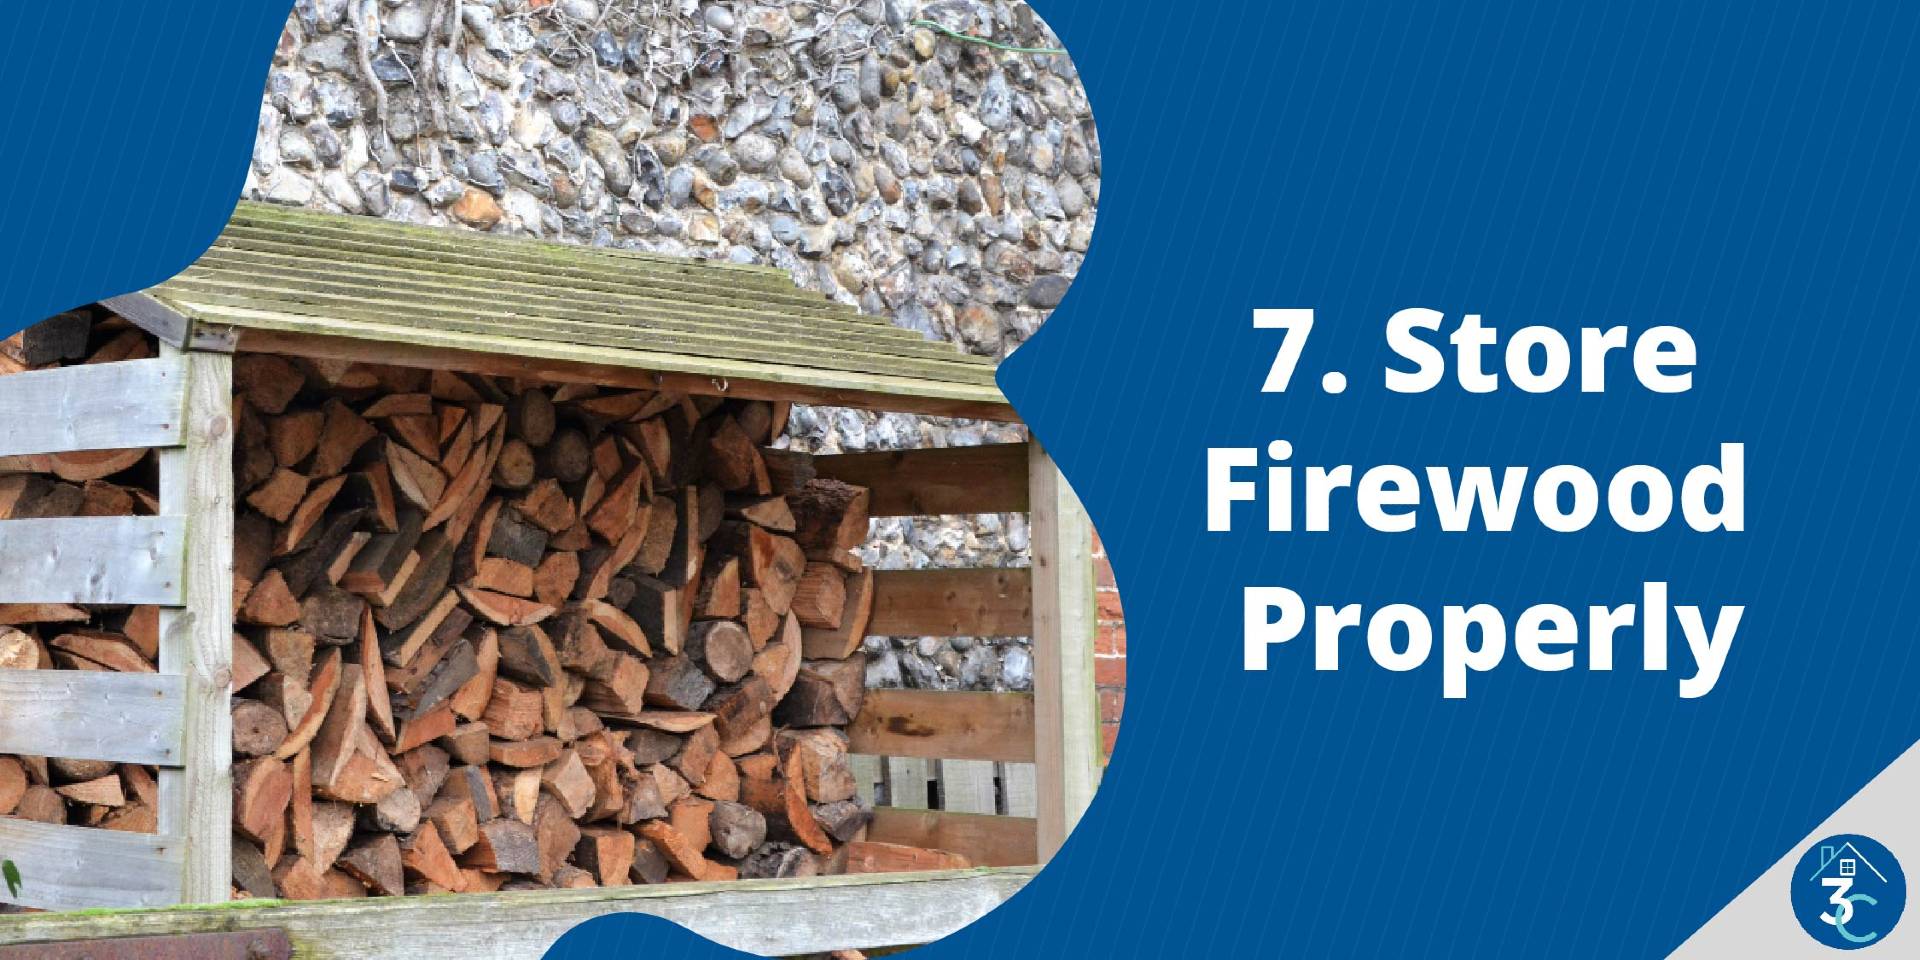 Store Firewood Properly